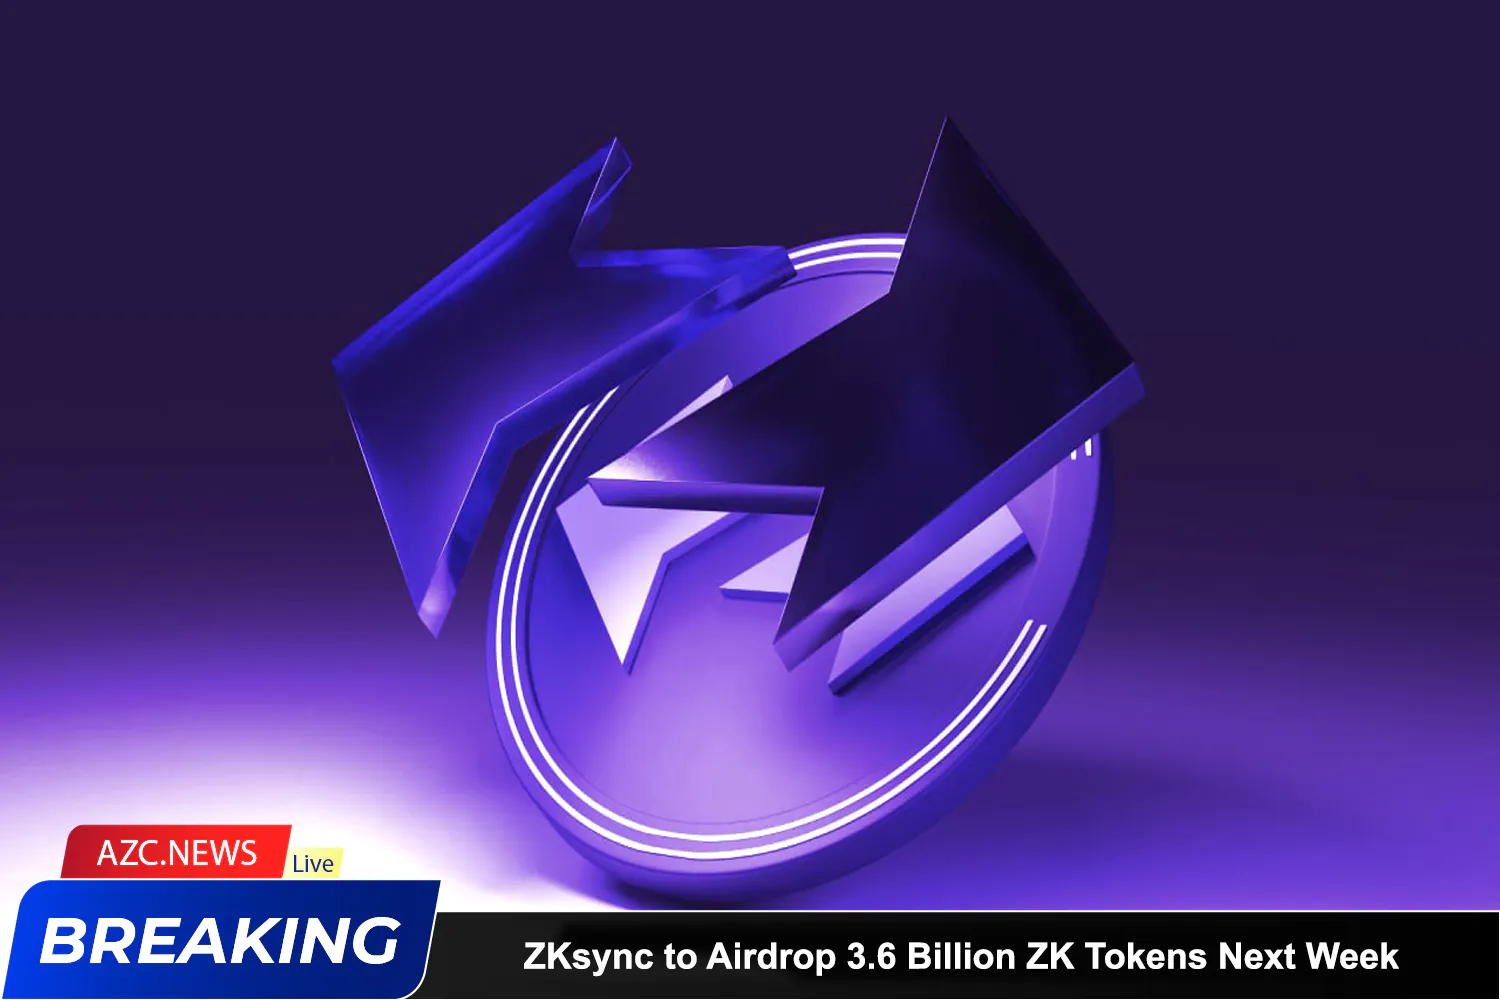 Azcnews Zksync To Airdrop 3.6 Billion Zk Tokens Next Week